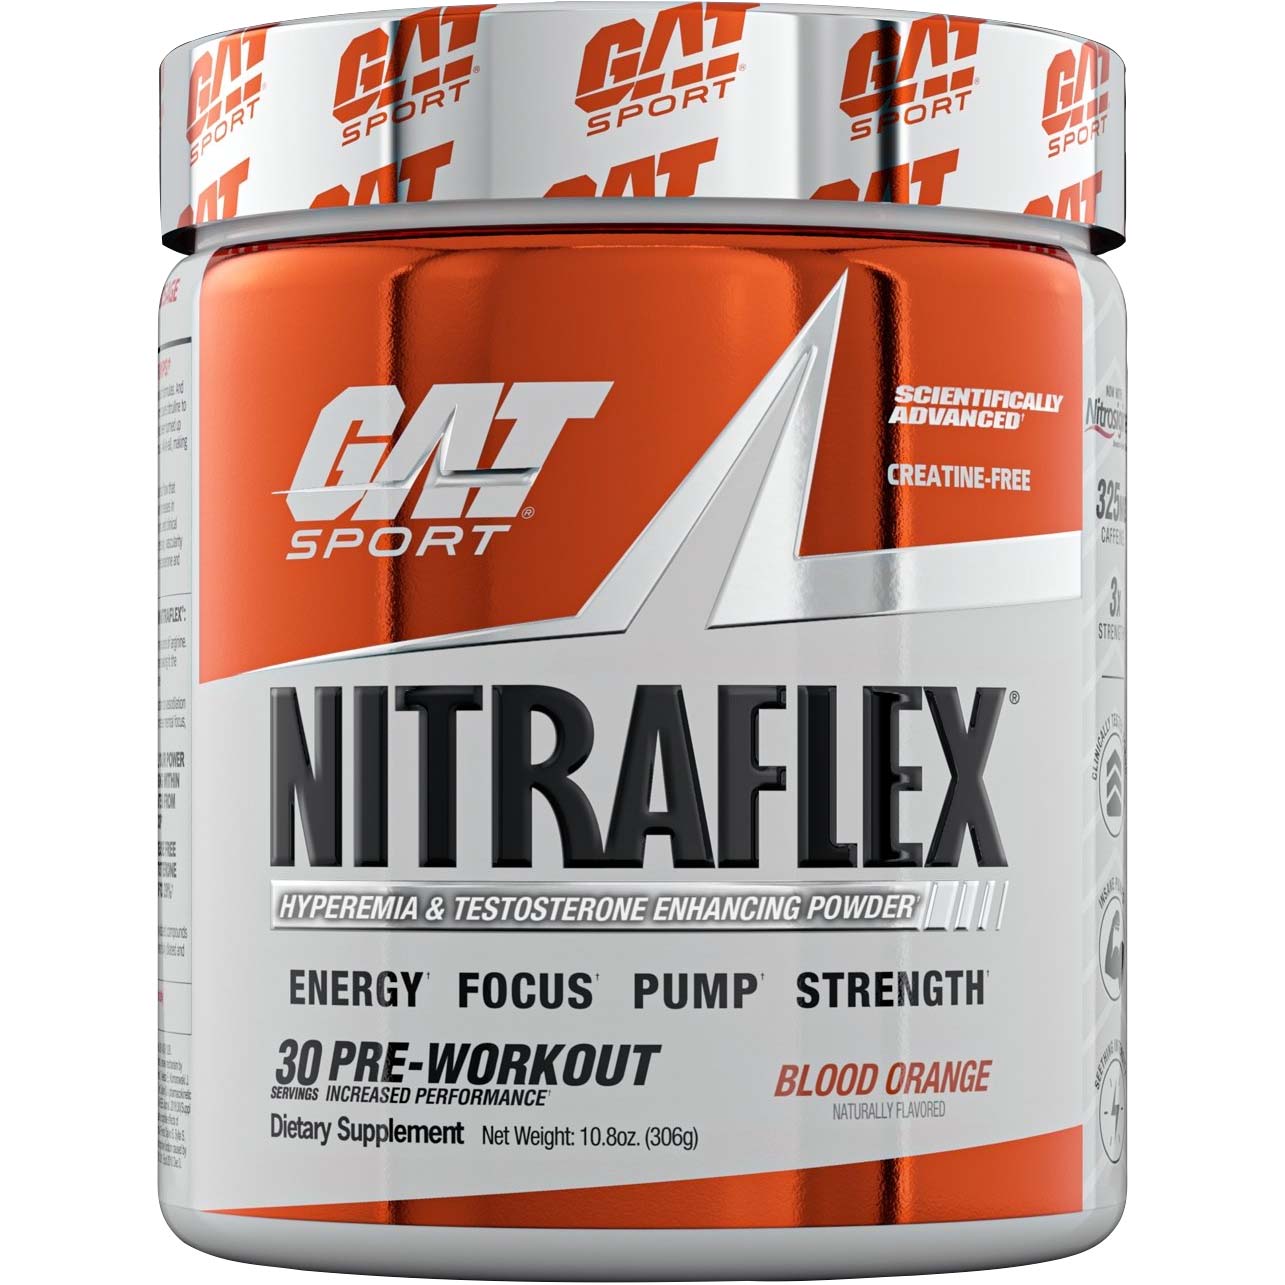 Gat Sport Nitraflex Testosterone Boosting Powder, Blood Orange, 30